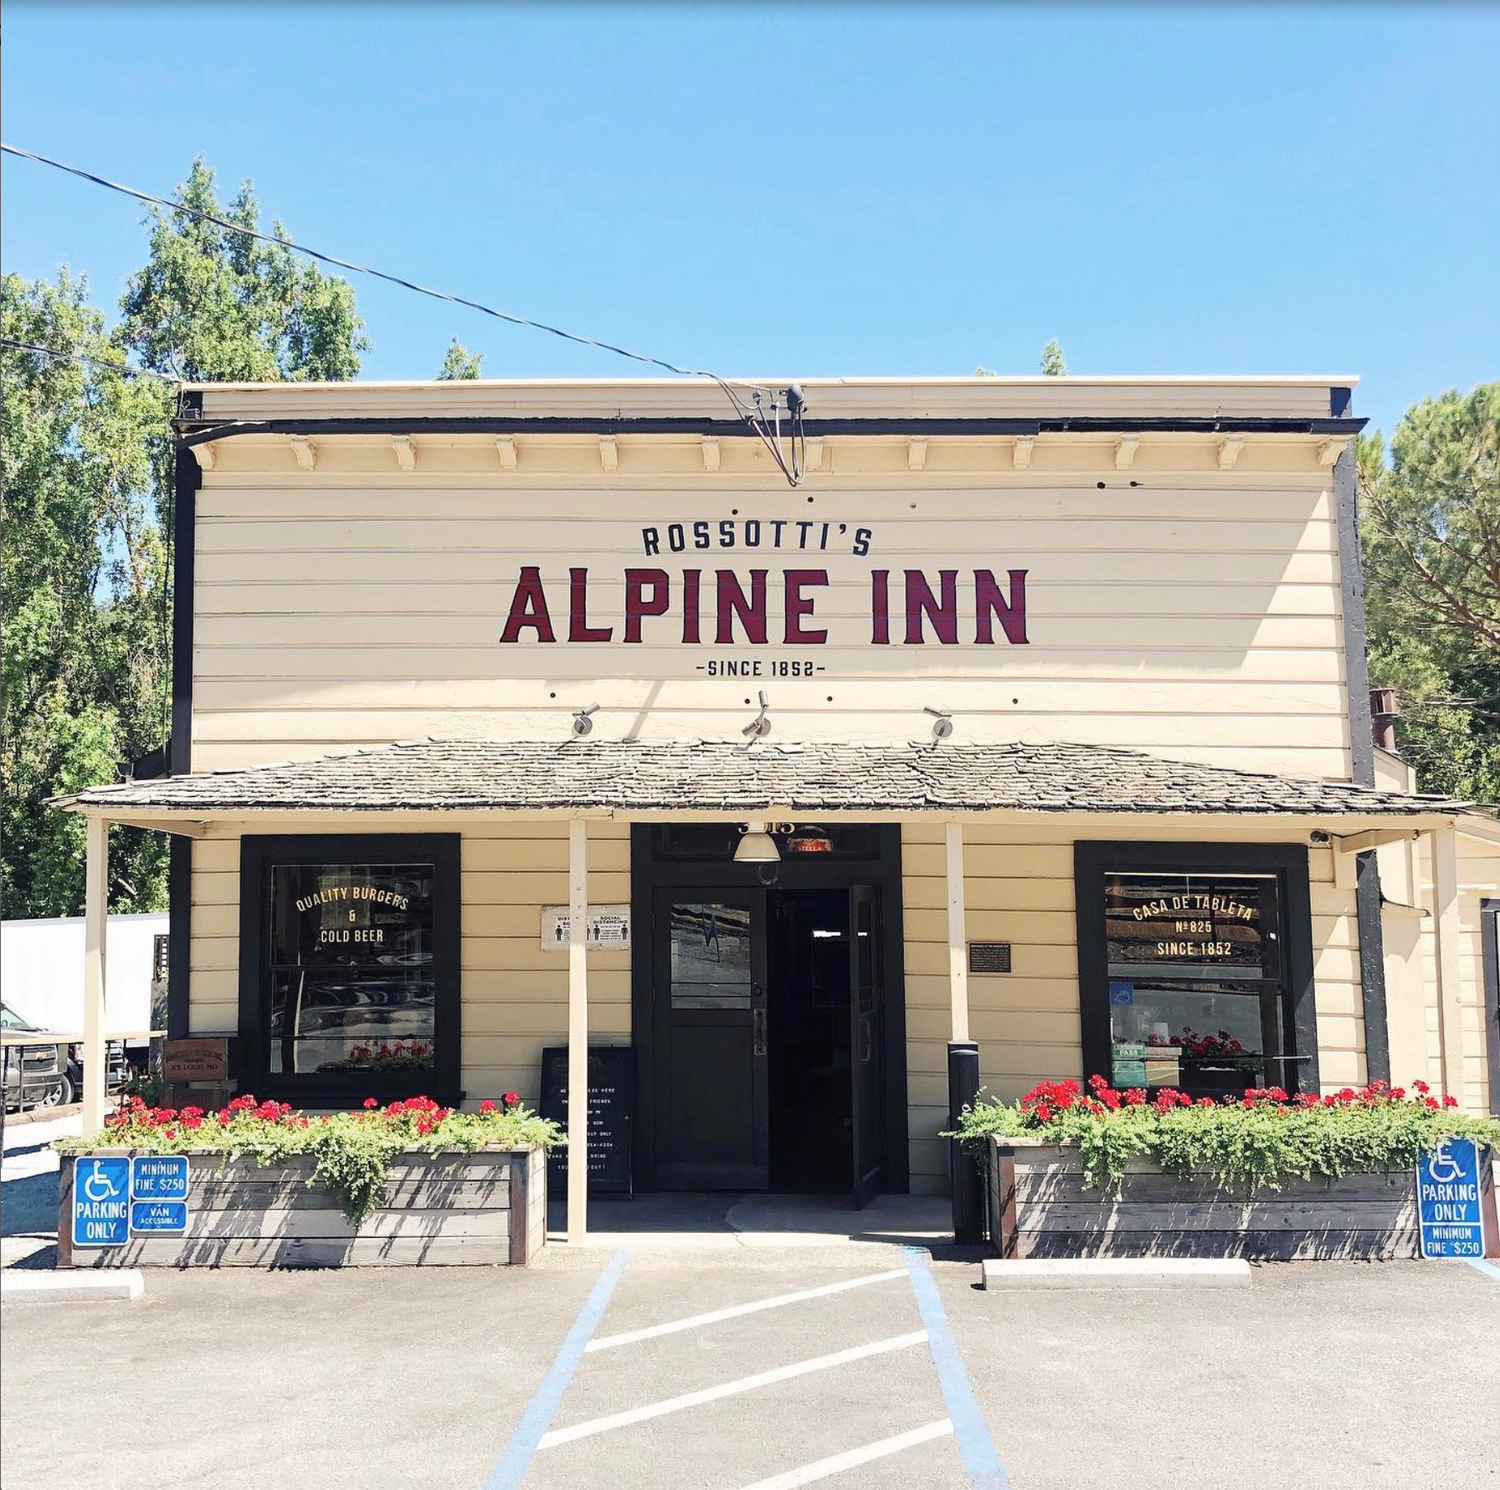 Photo source: Rossotti's Alpine Inn